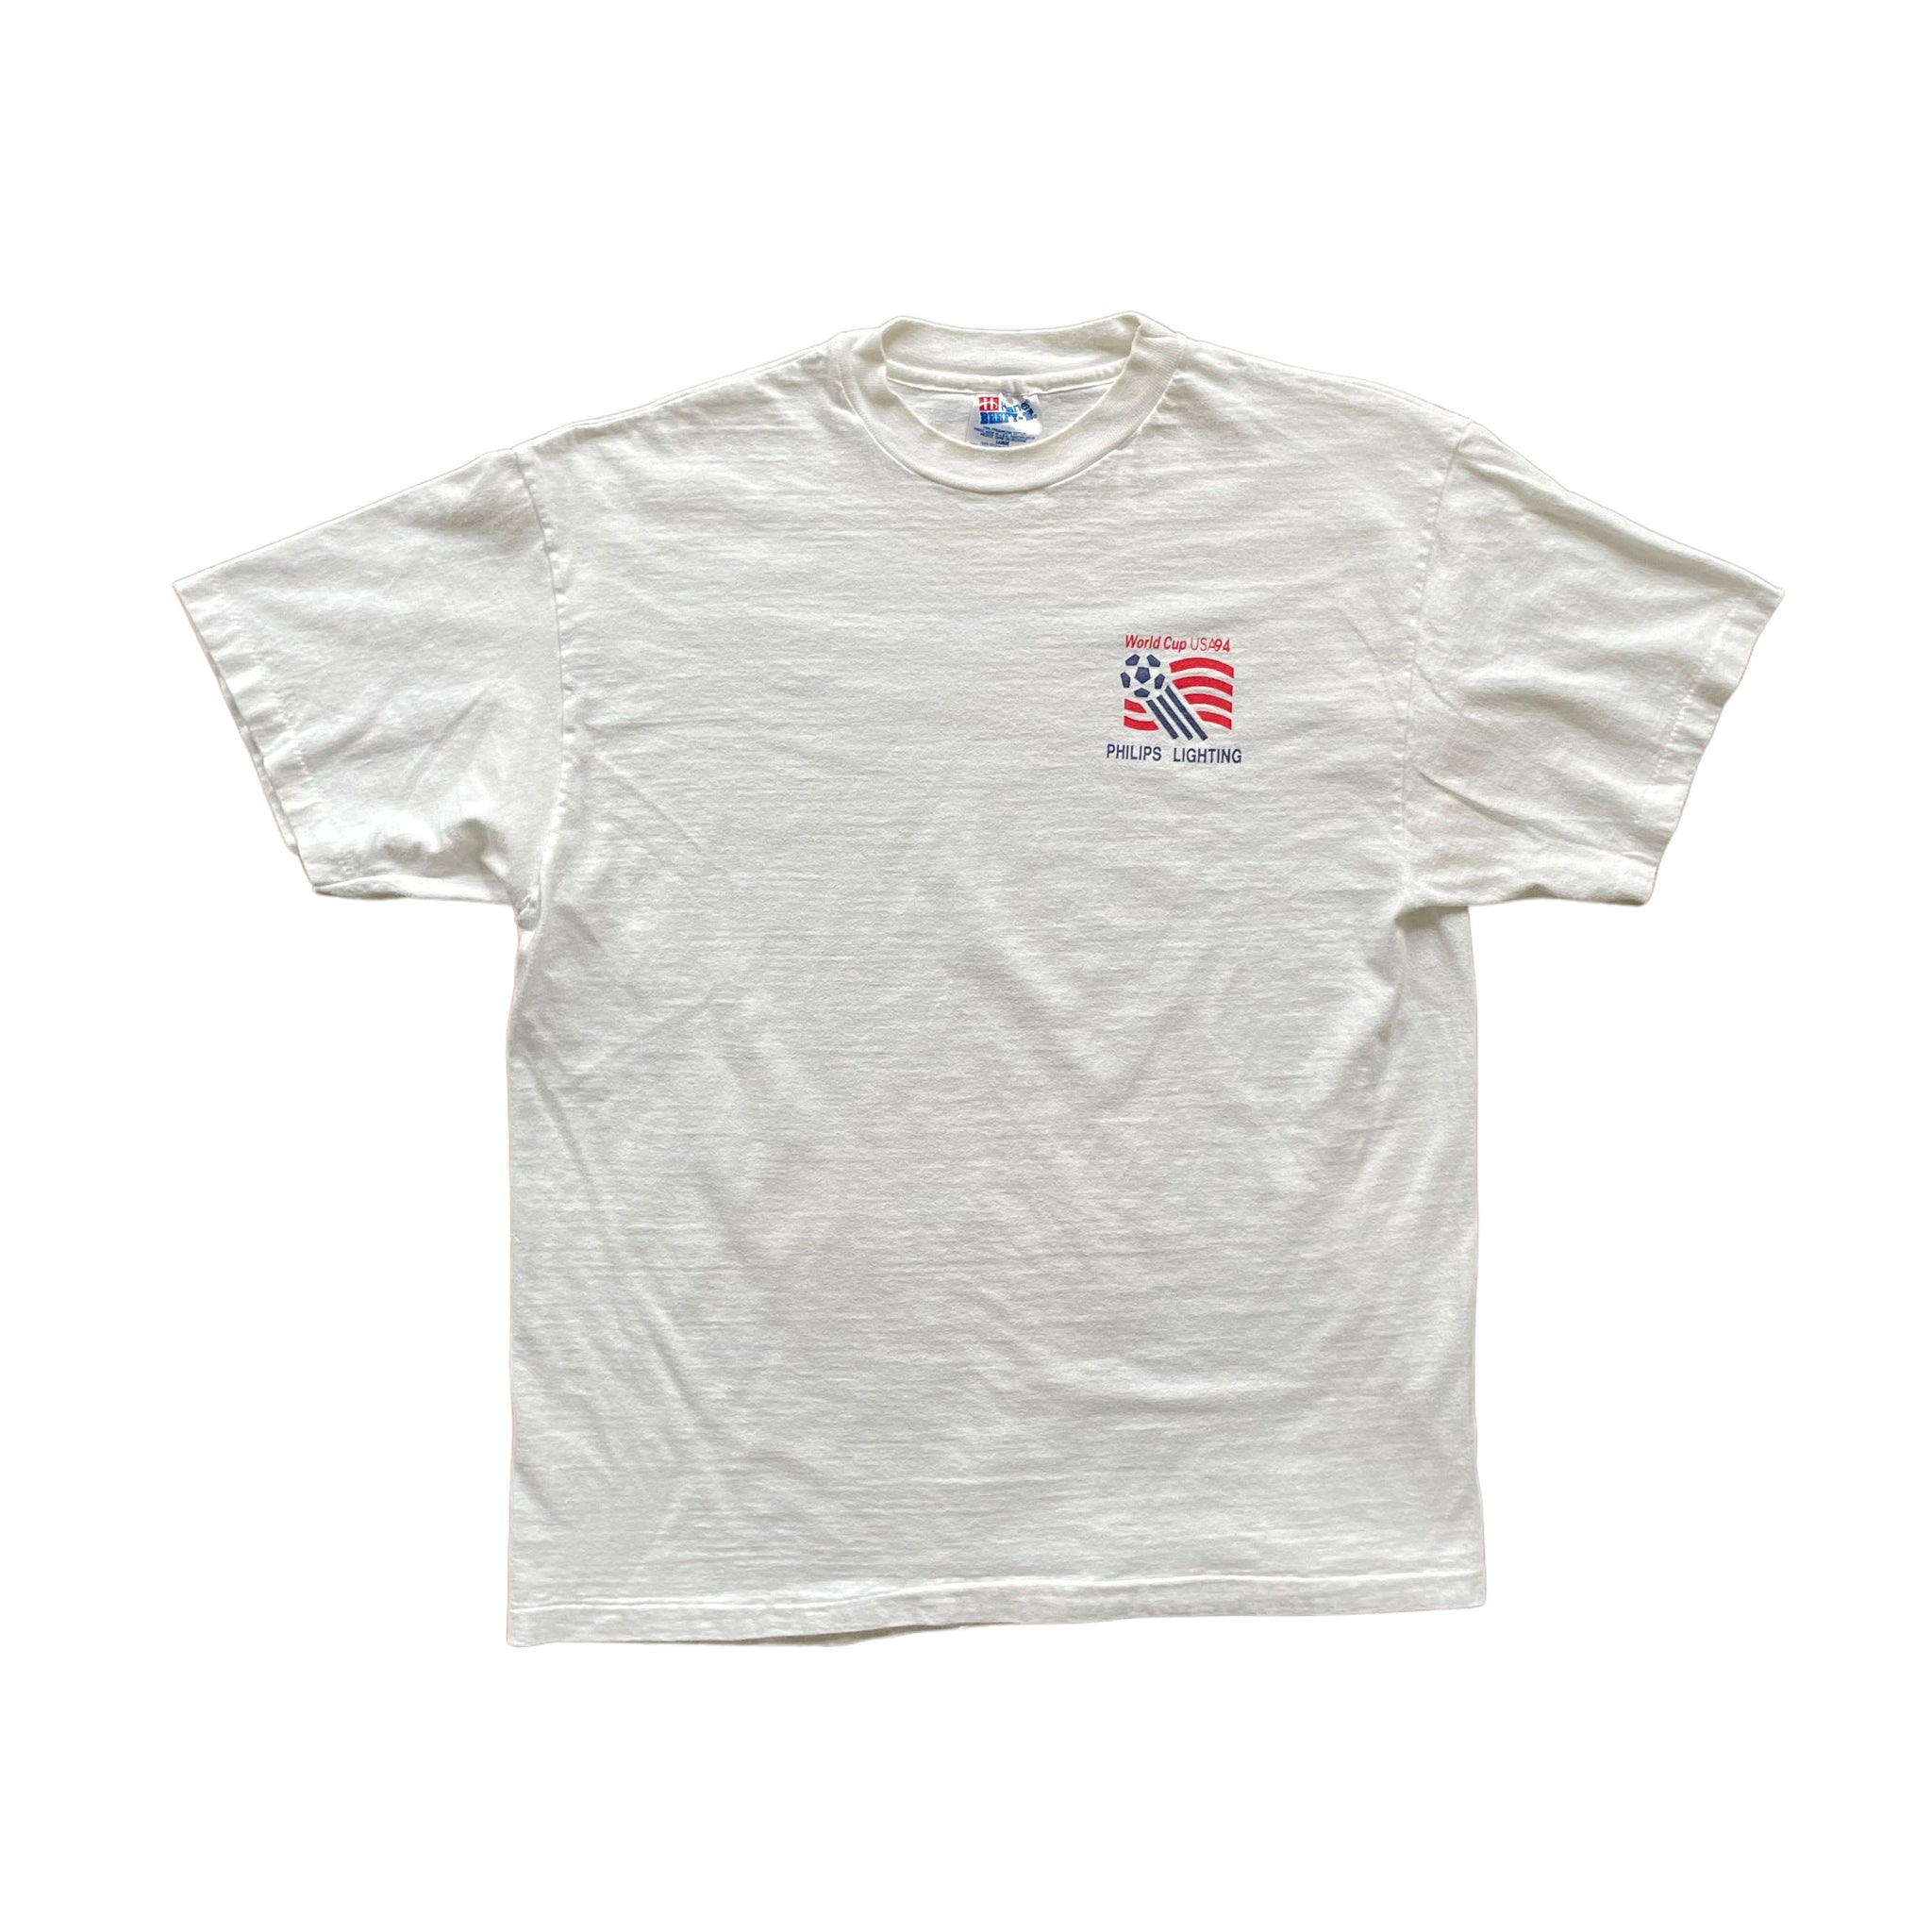 1994 World Cup Philips Lighting T-Shirt - M